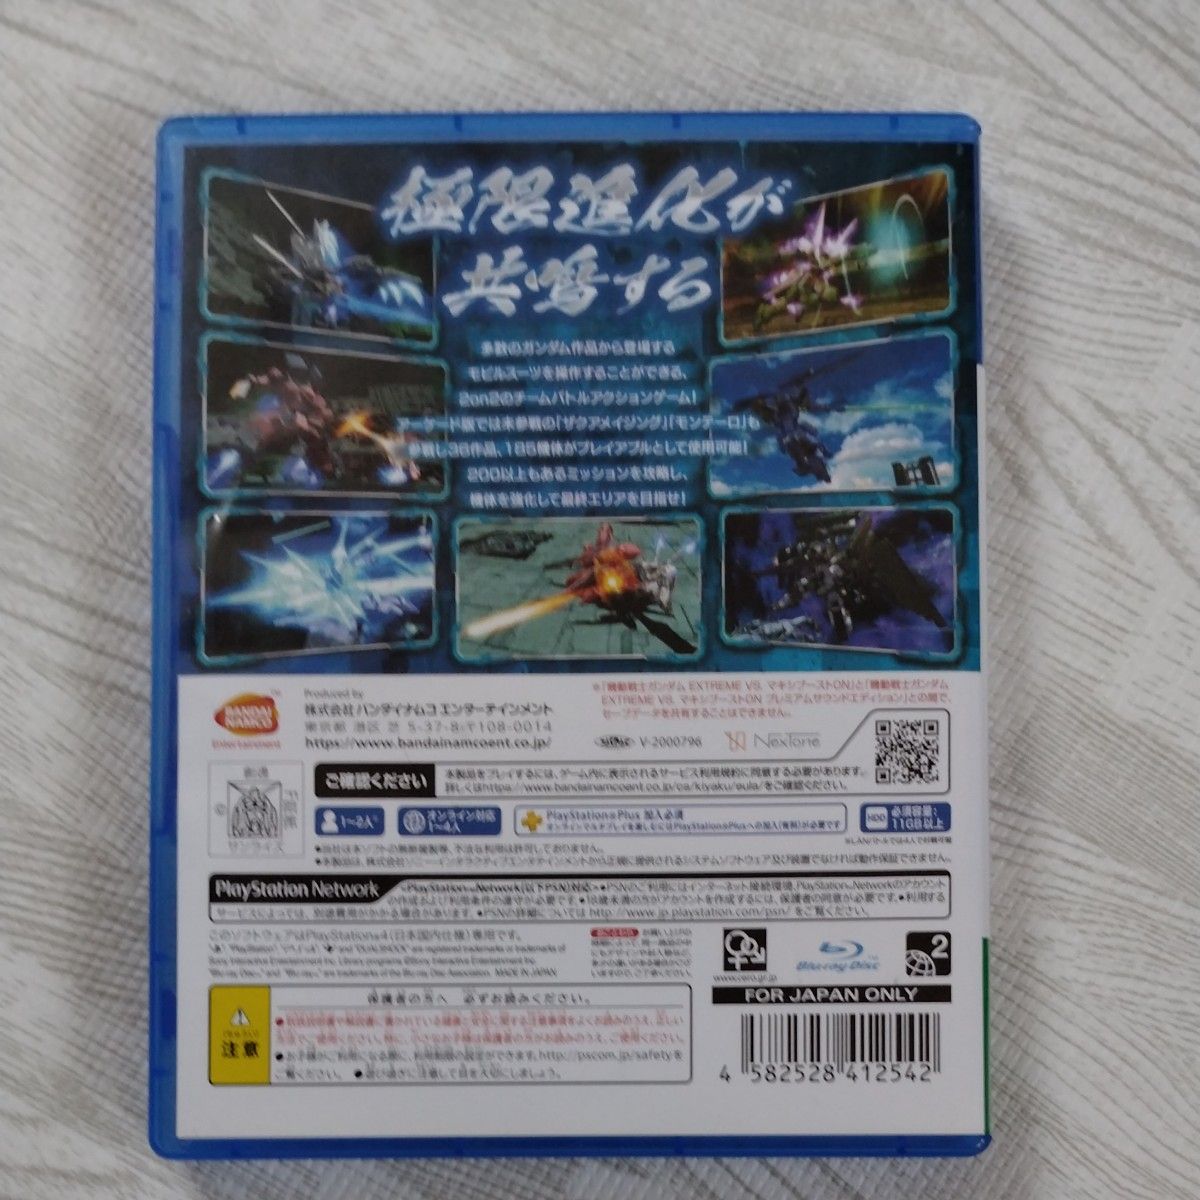 【PS4】 機動戦士ガンダム EXTREME VS. マキシブーストON [通常版]